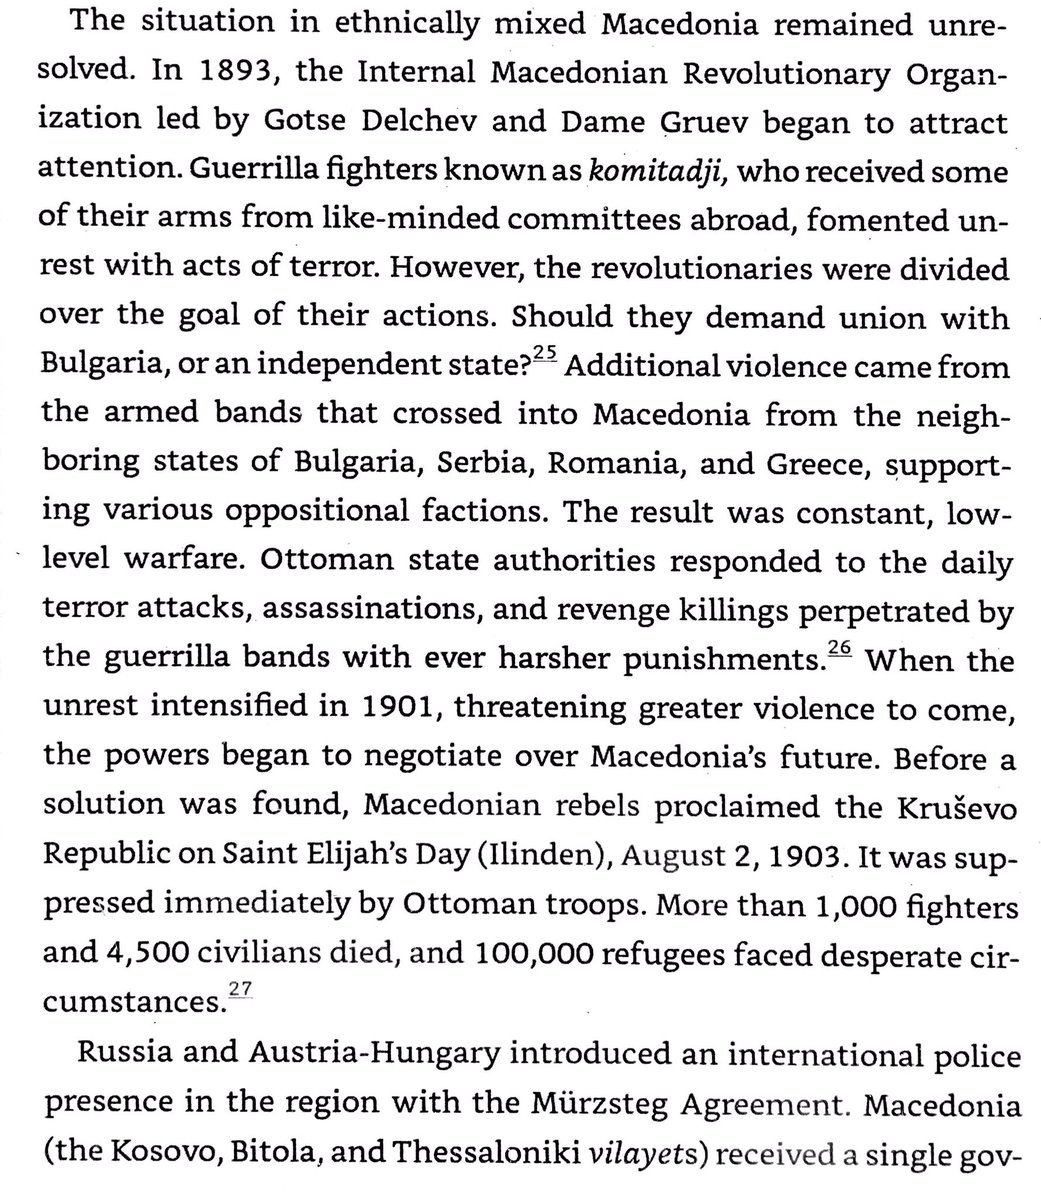 Macedonia was ungovernable between Russo-Turkish & Balkan Wars. Internal Macedonian Revolutionary Organization (IMRO), & Ottoman authorities fought each other with assassinations, terror attacks, & revenge killings.